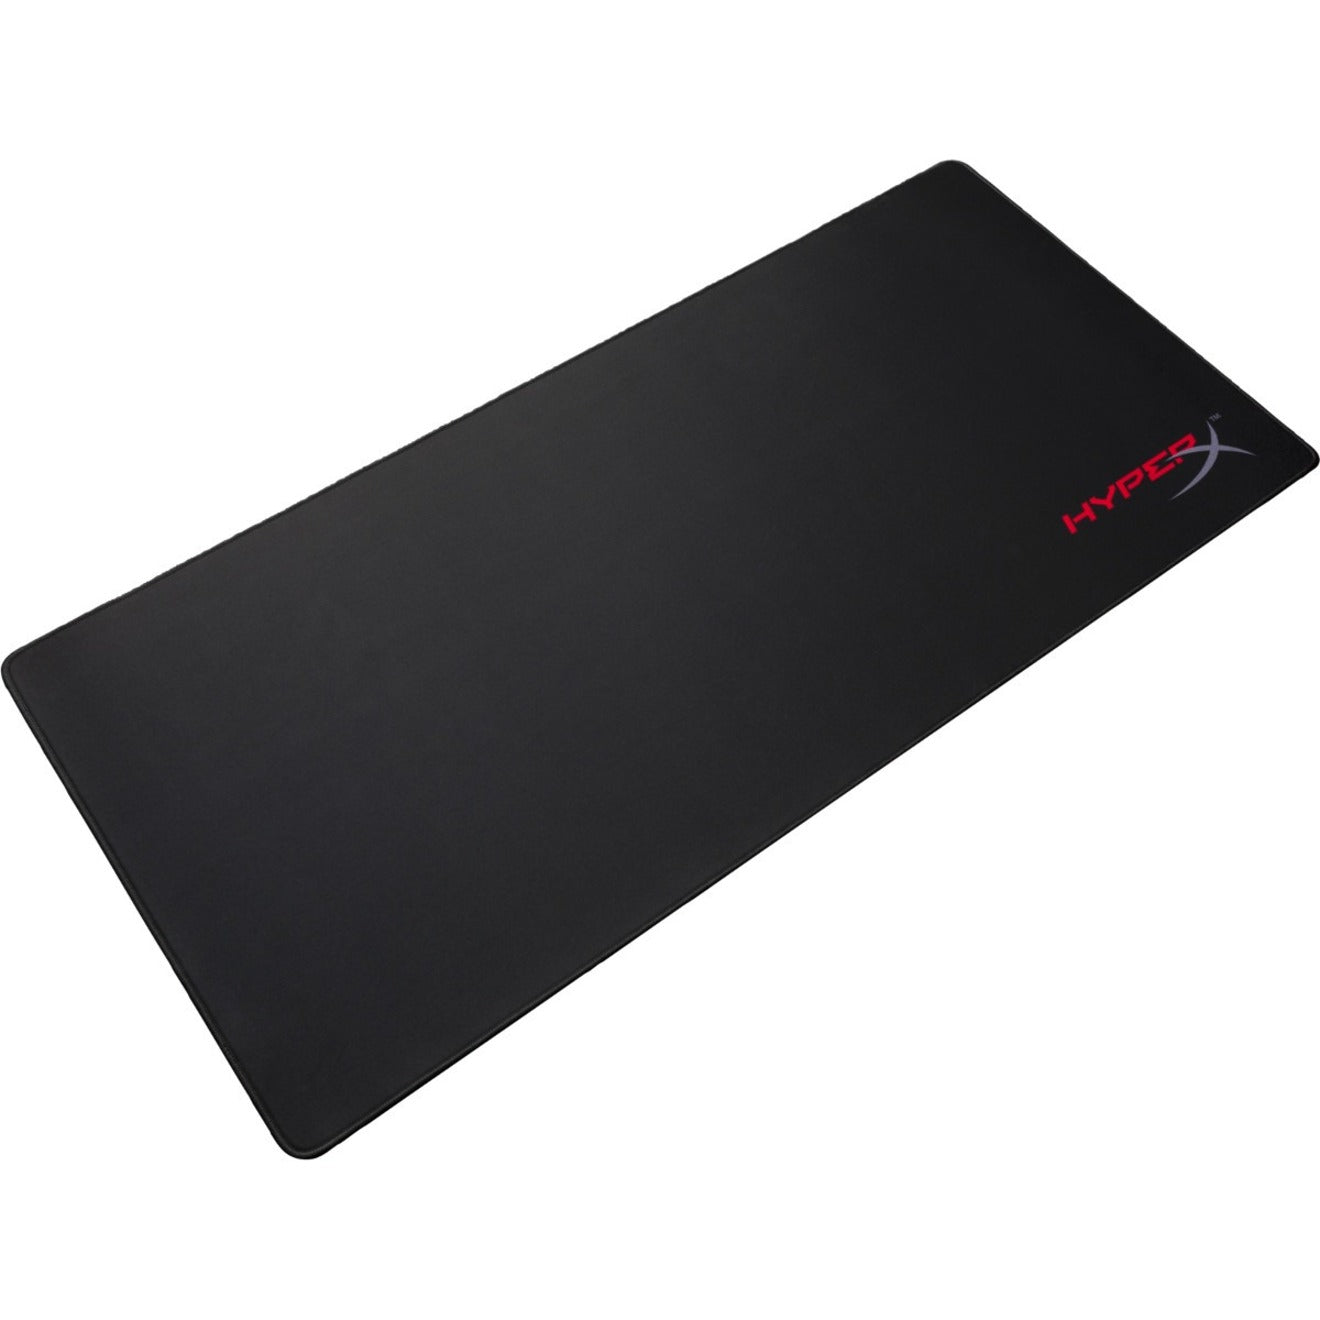 HyperX 4P5Q9AA FURY S Gaming Mouse Pad, Large Size, Black, Non-Slip Base